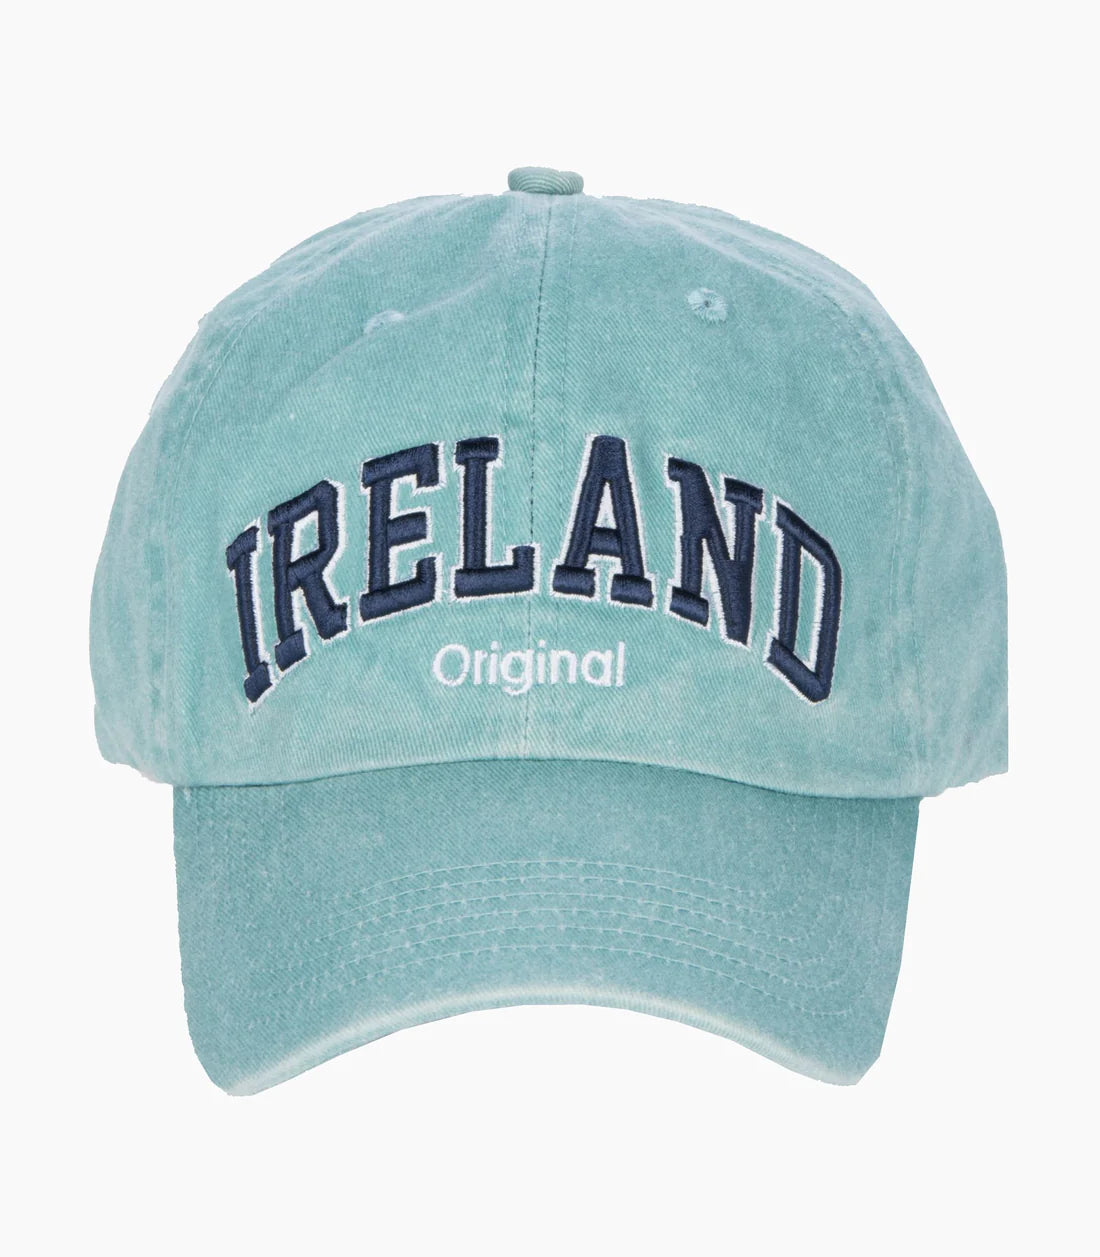 Ireland Original Baseball Cap (Turquoise)